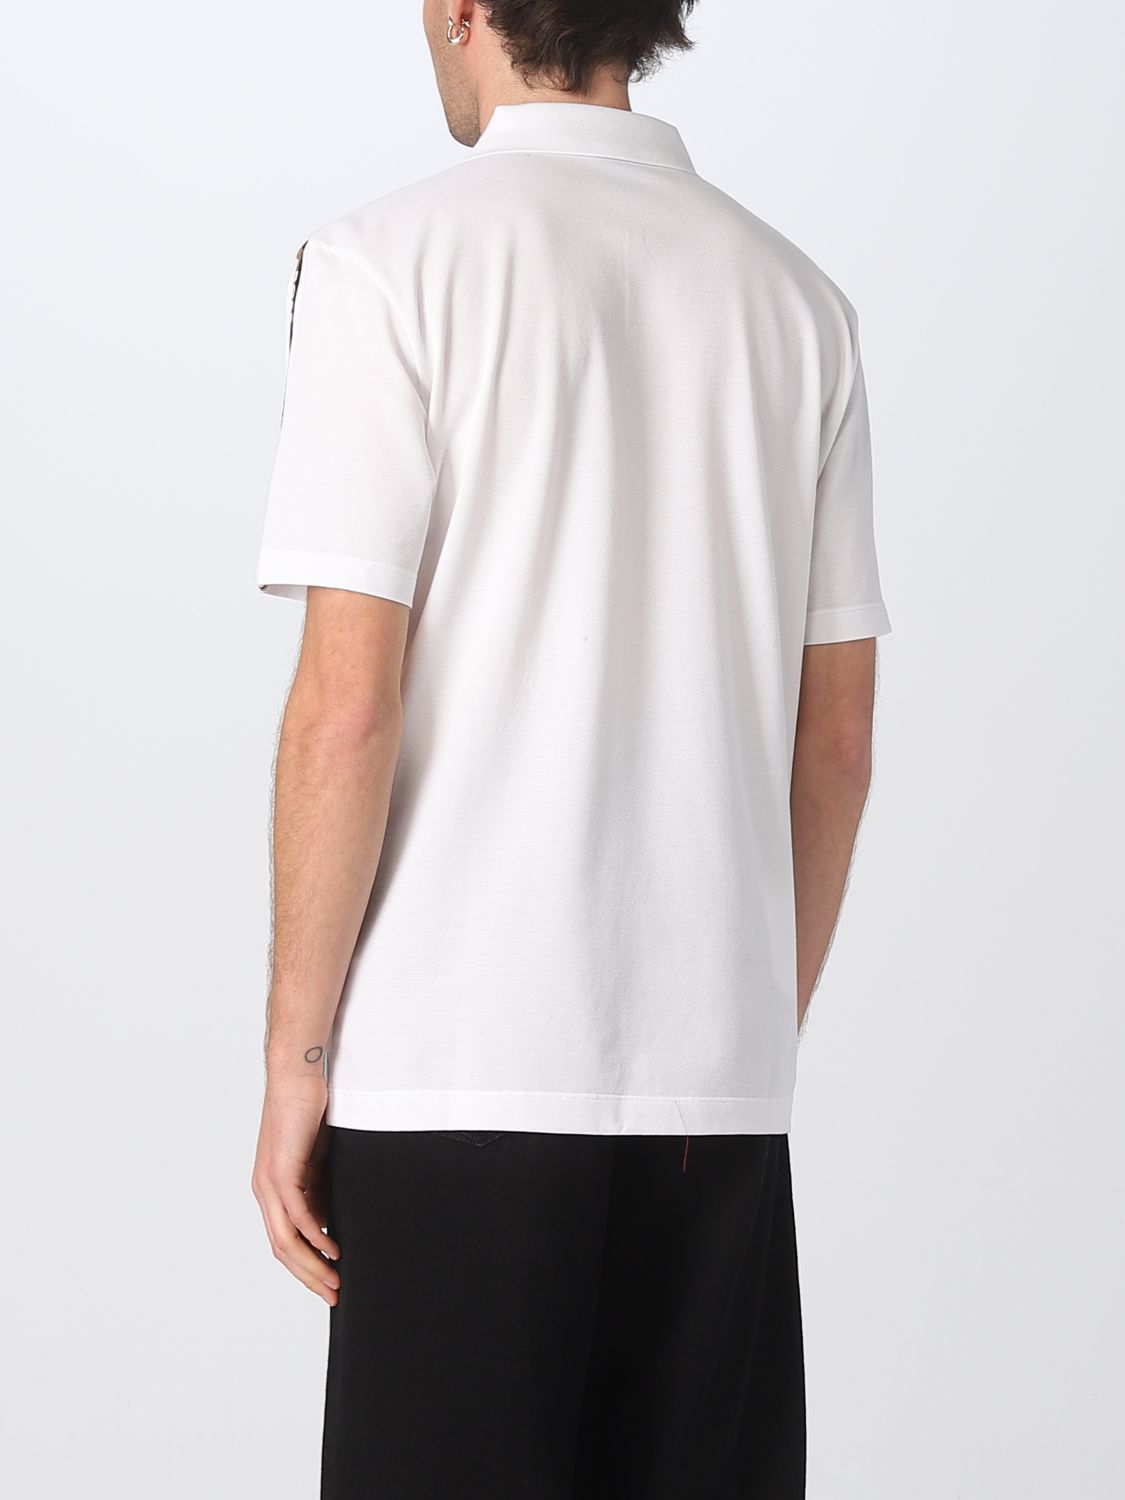 BOSS: polo shirt for man - White | Boss polo shirt 50481764 online on ...